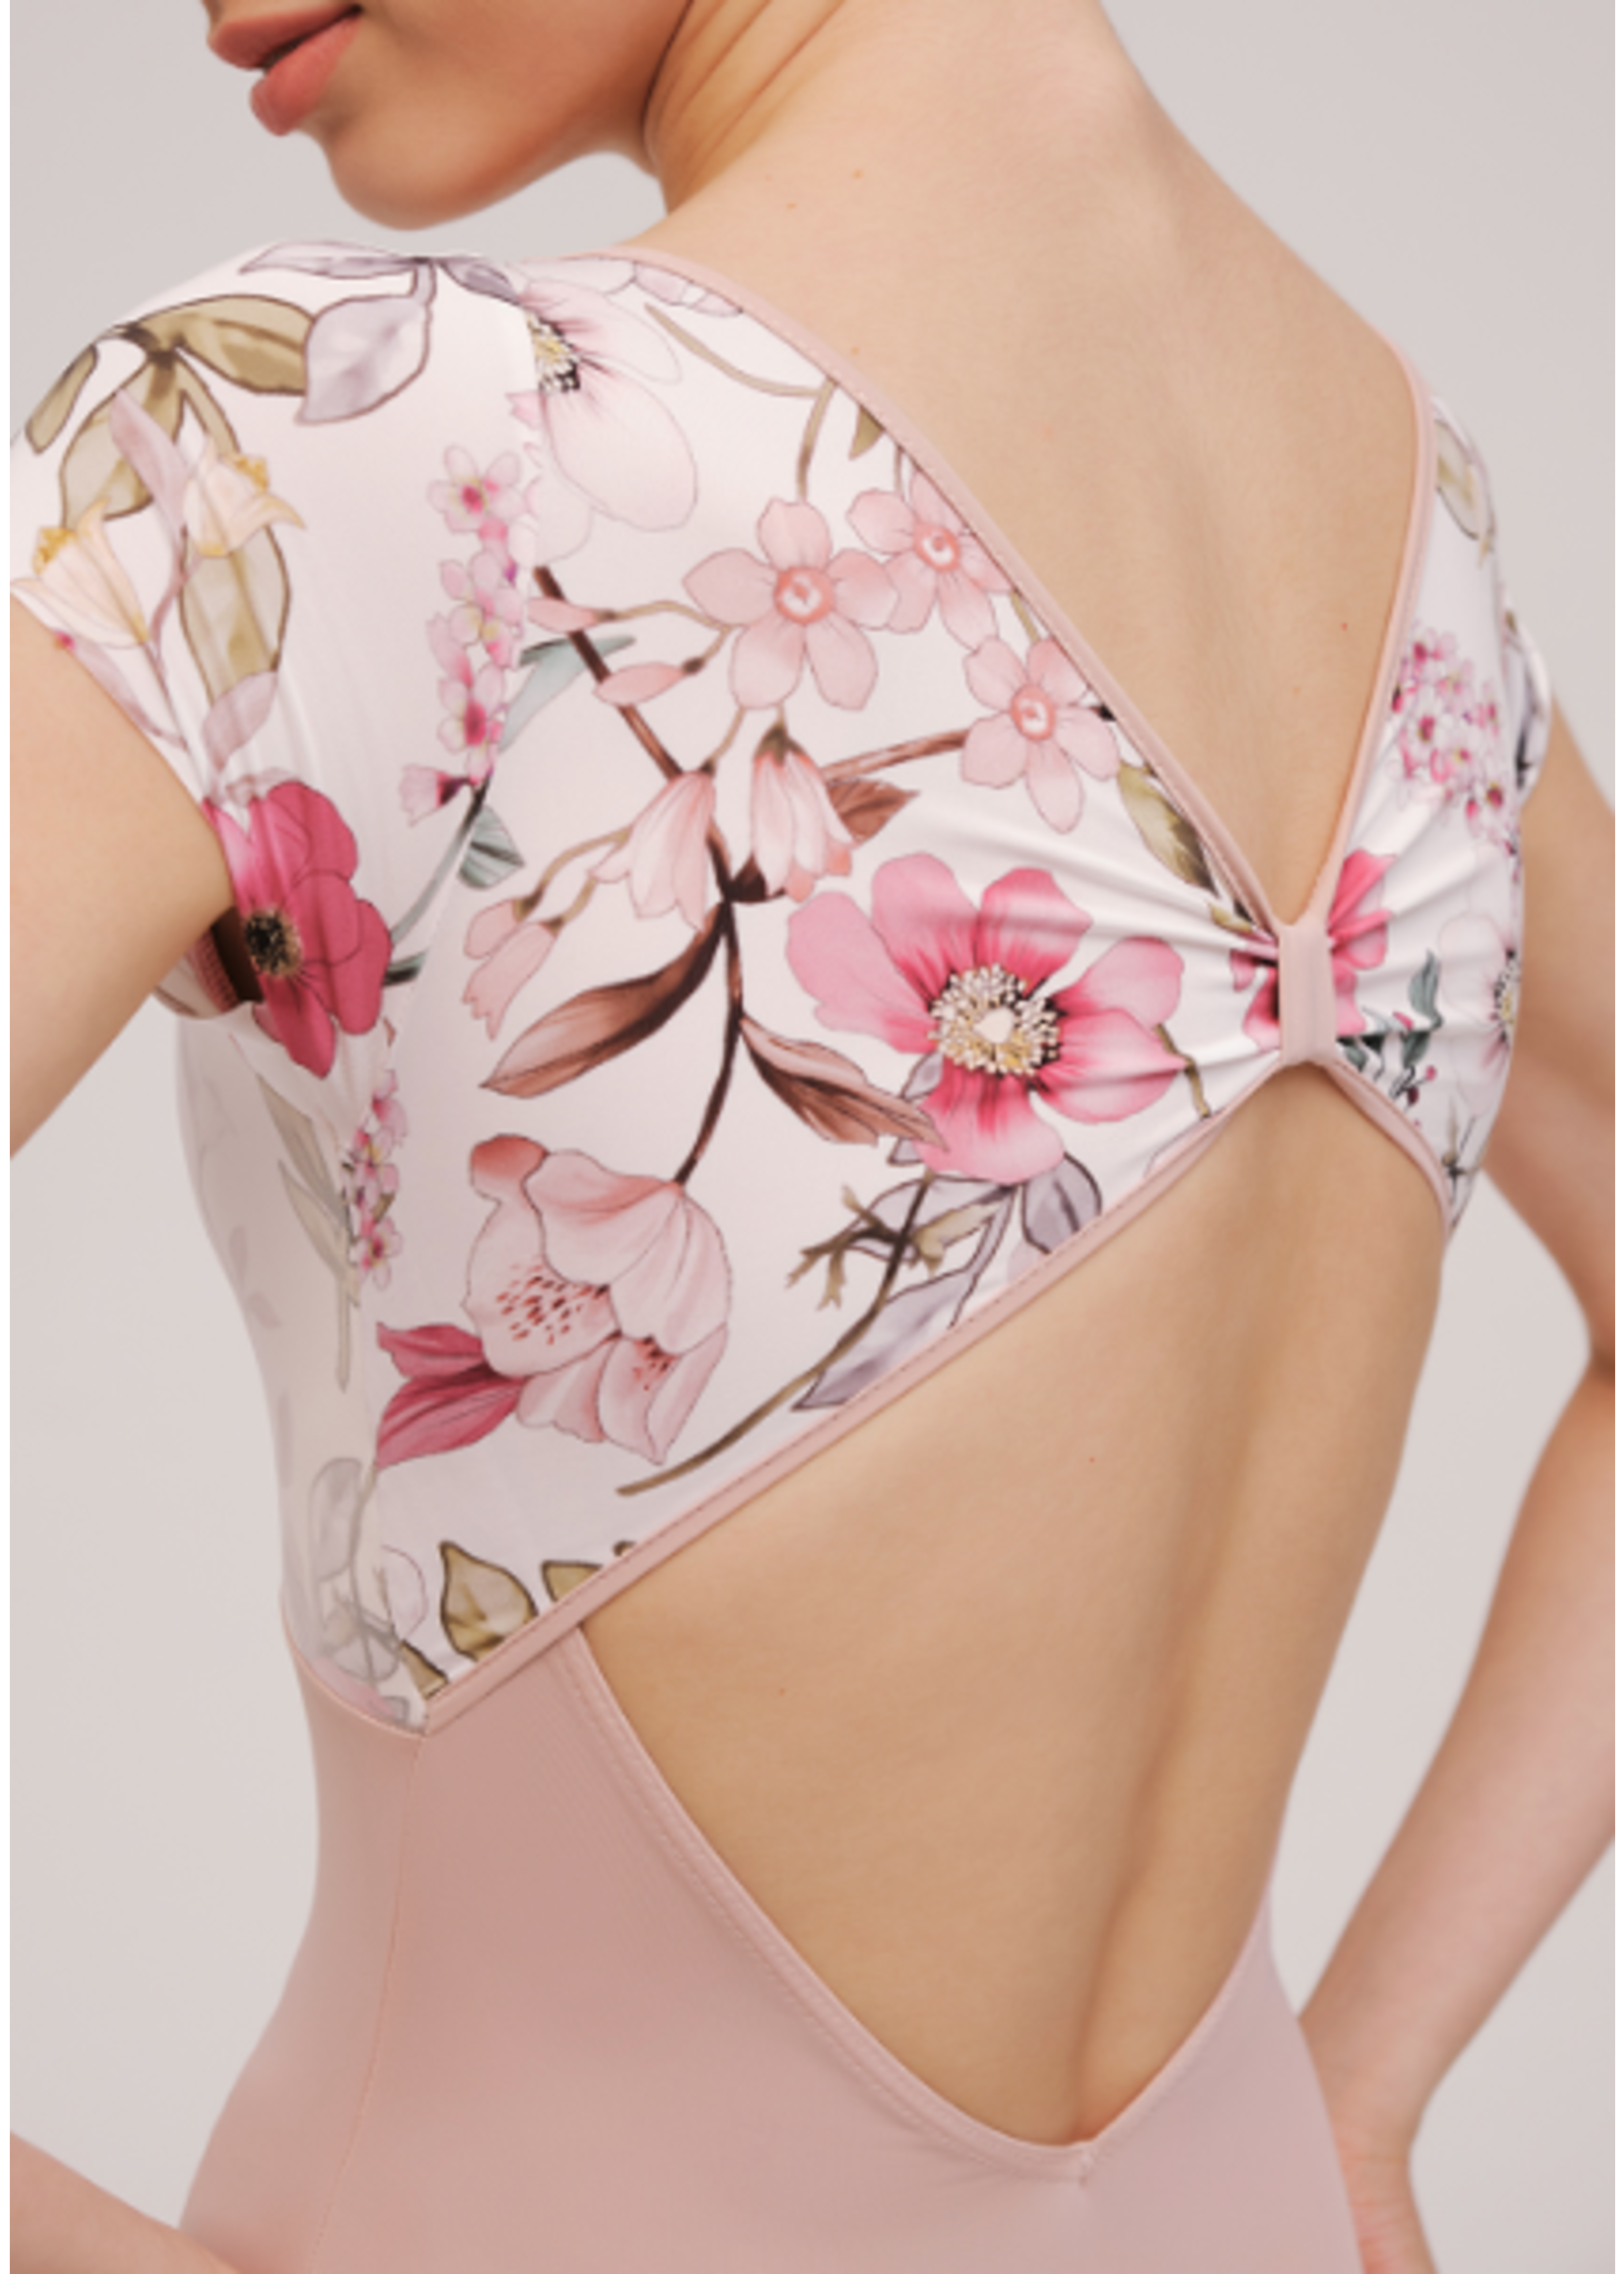 CALIA Women's Essentials Mesh Bodysuit, Large, Rose Pink - Yahoo